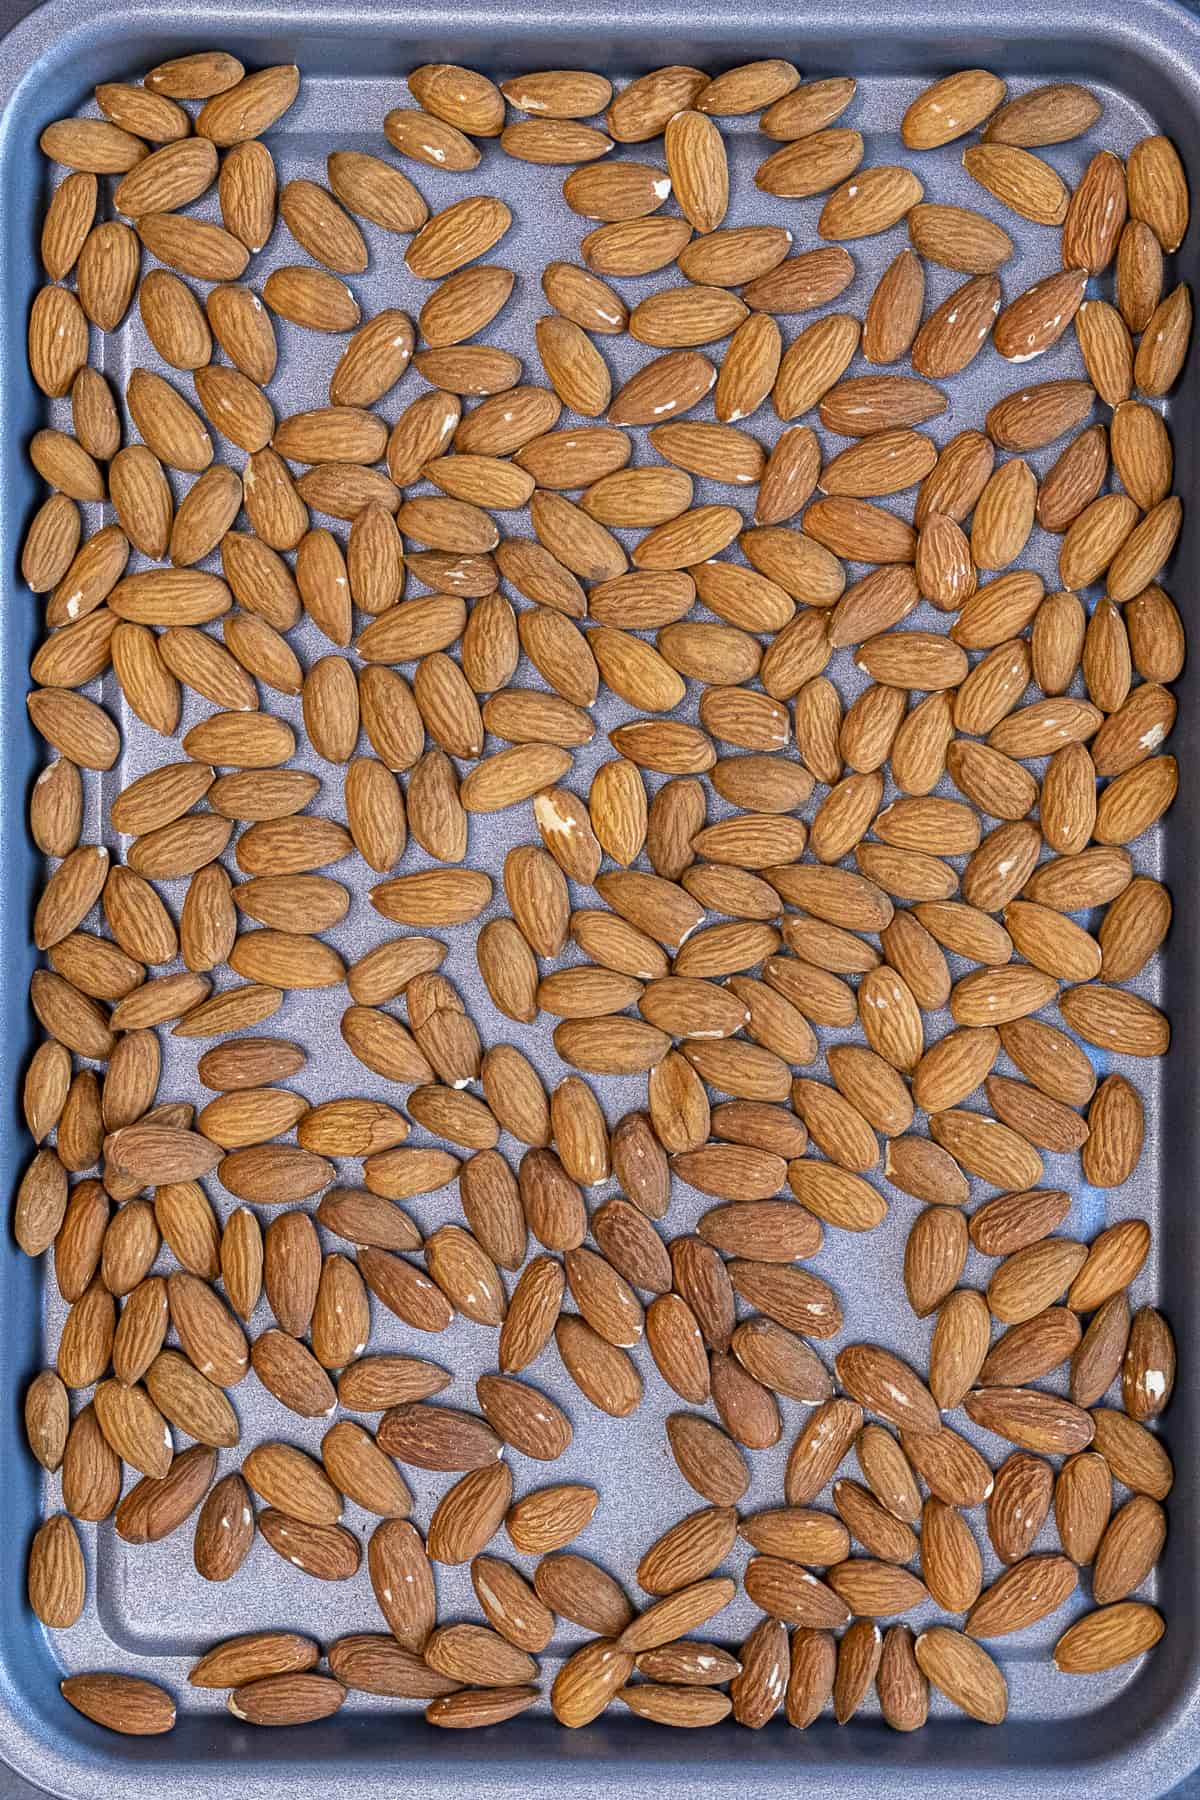 Raw almonds on a small baking sheet.